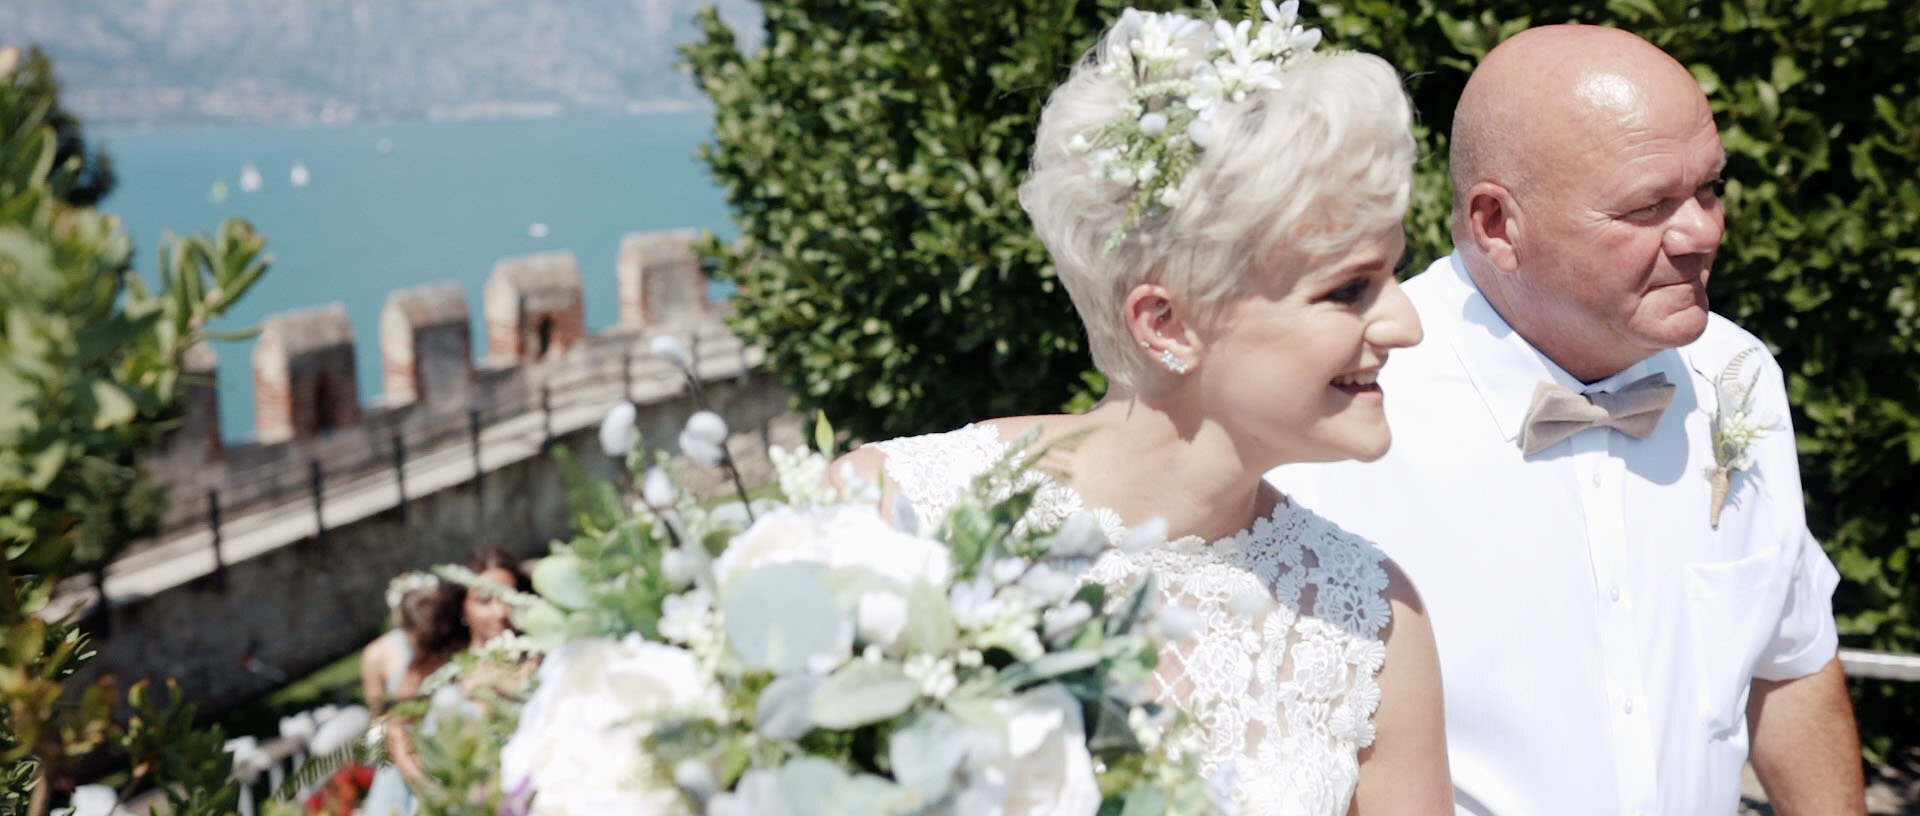 Emma & Tom Destination Wedding Film Video in Malcesine Italy 17.jpg